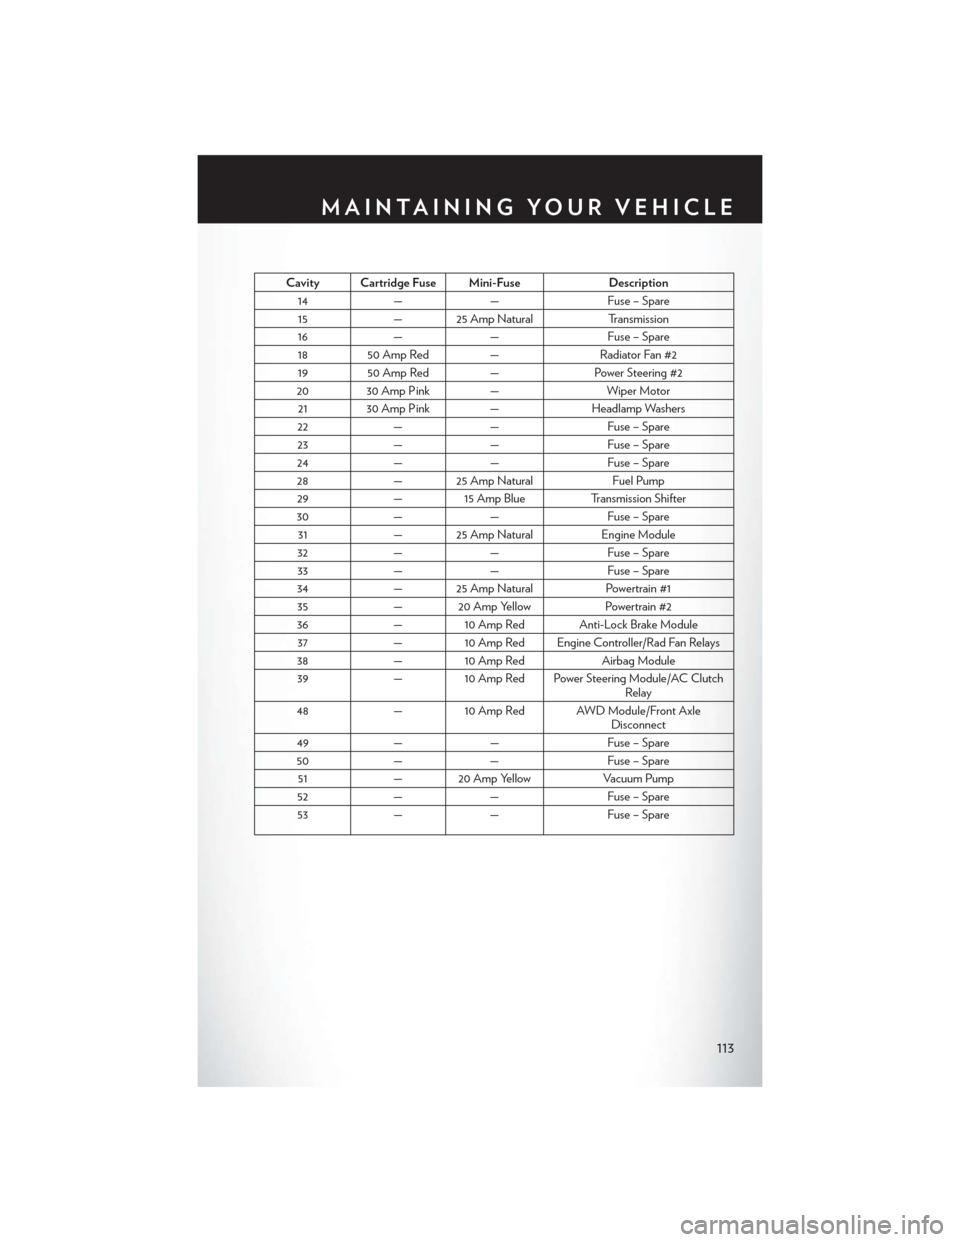 CHRYSLER 300 SRT 2014 2.G User Guide Cavity Cartridge Fuse Mini-FuseDescription
14 — — Fuse – Spare
15 — 25 Amp Natural Transmission
16 — — Fuse – Spare
18 50 Amp Red — Radiator Fan #2
19 50 Amp Red — Power Steering #2
